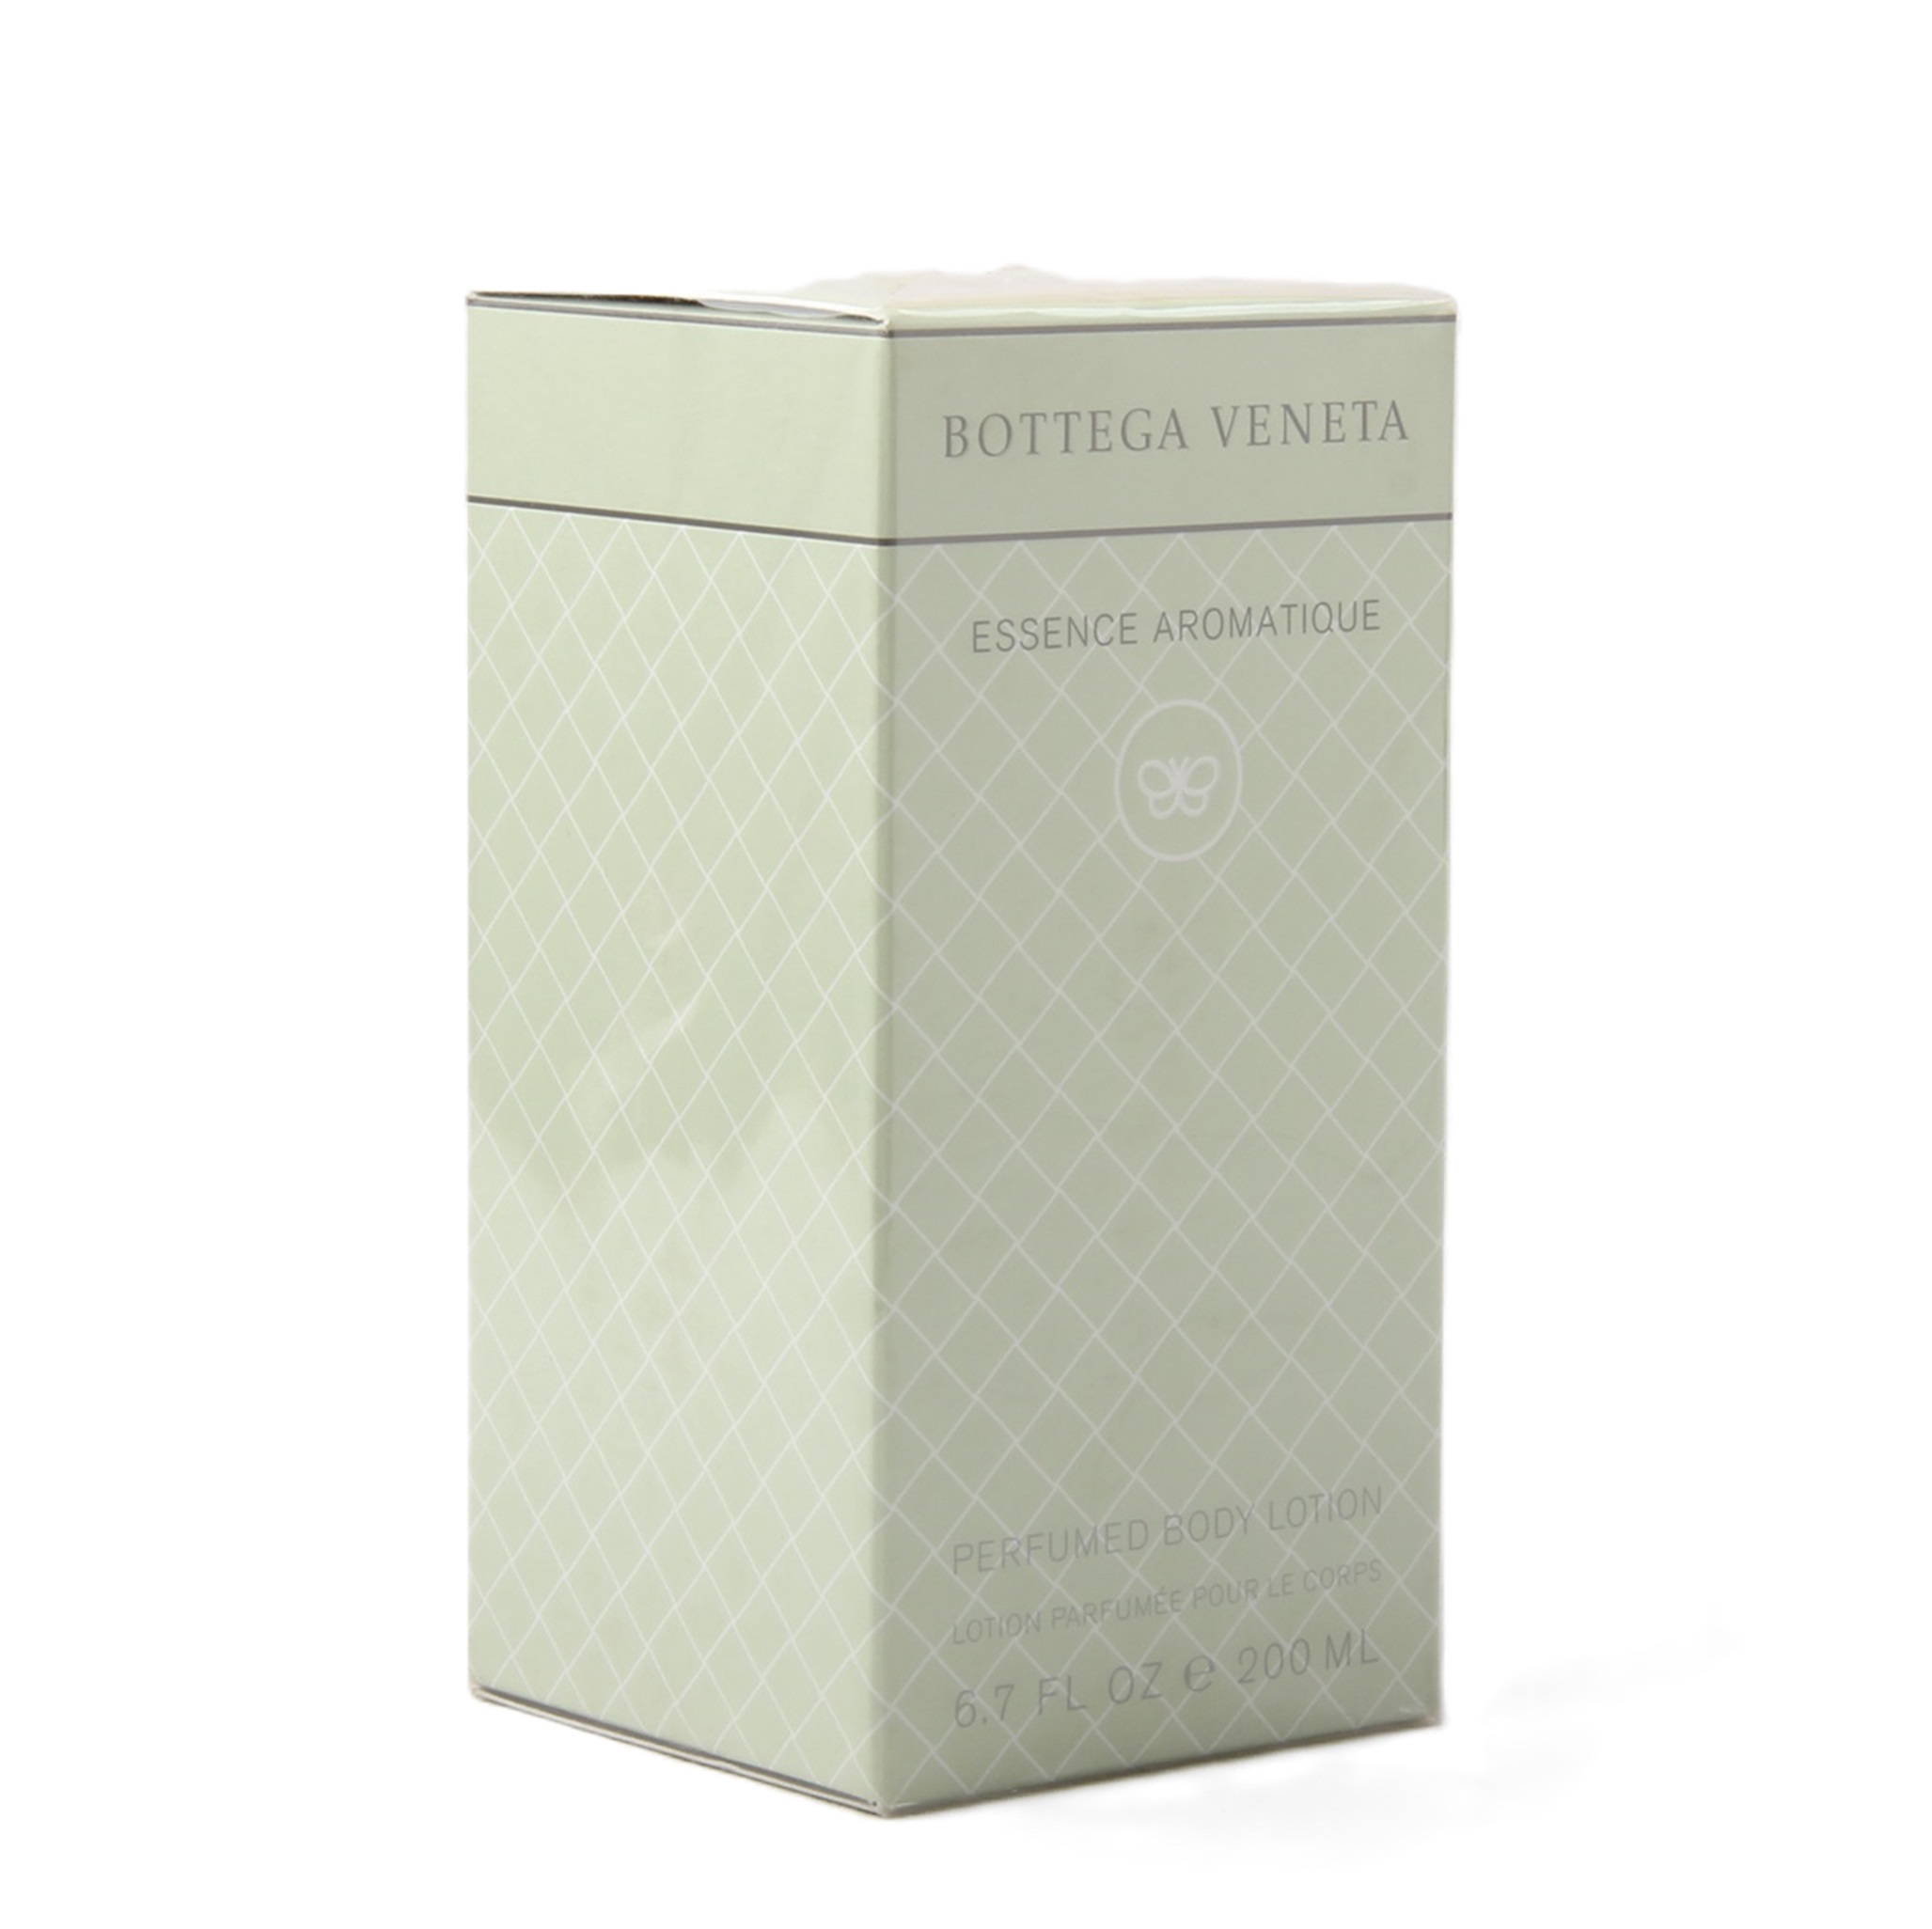 Bottega Veneta Essence Aromatique Perfumed Body Lotion 200ml